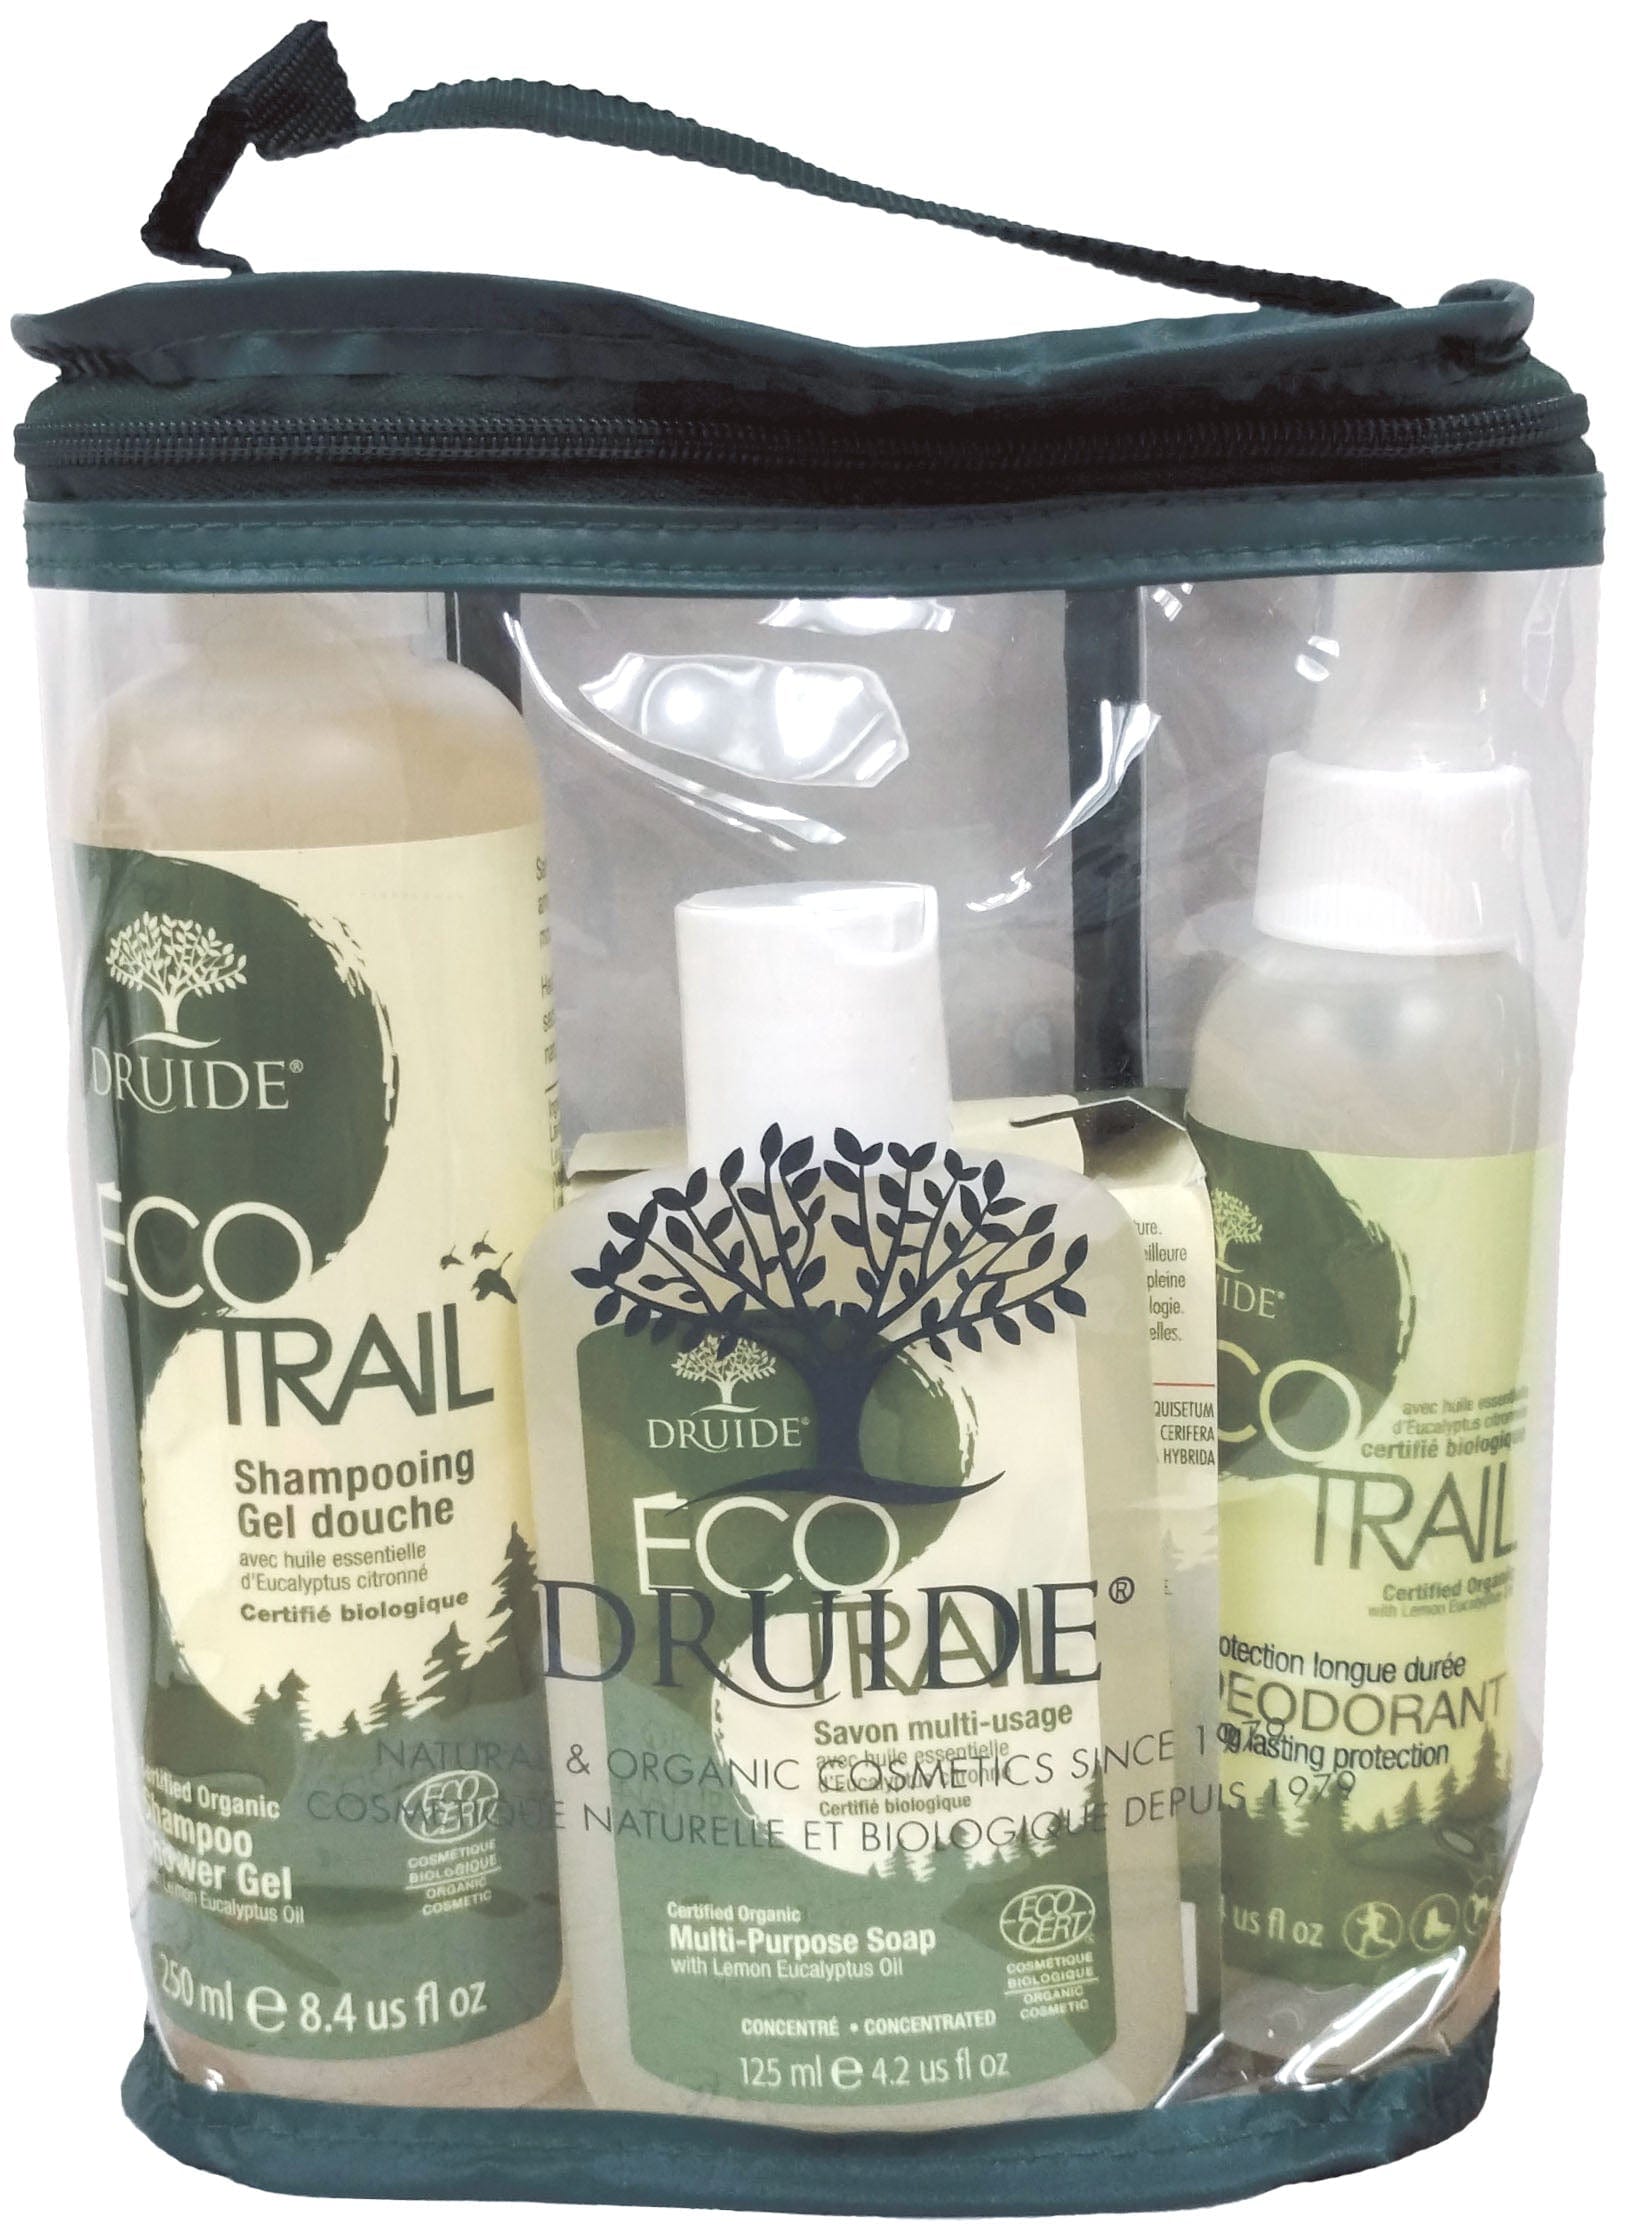 DRUIDE Soins & beauté Trousse plein air bio (savon / gel douche / déodorant / savon multi-usage) kit